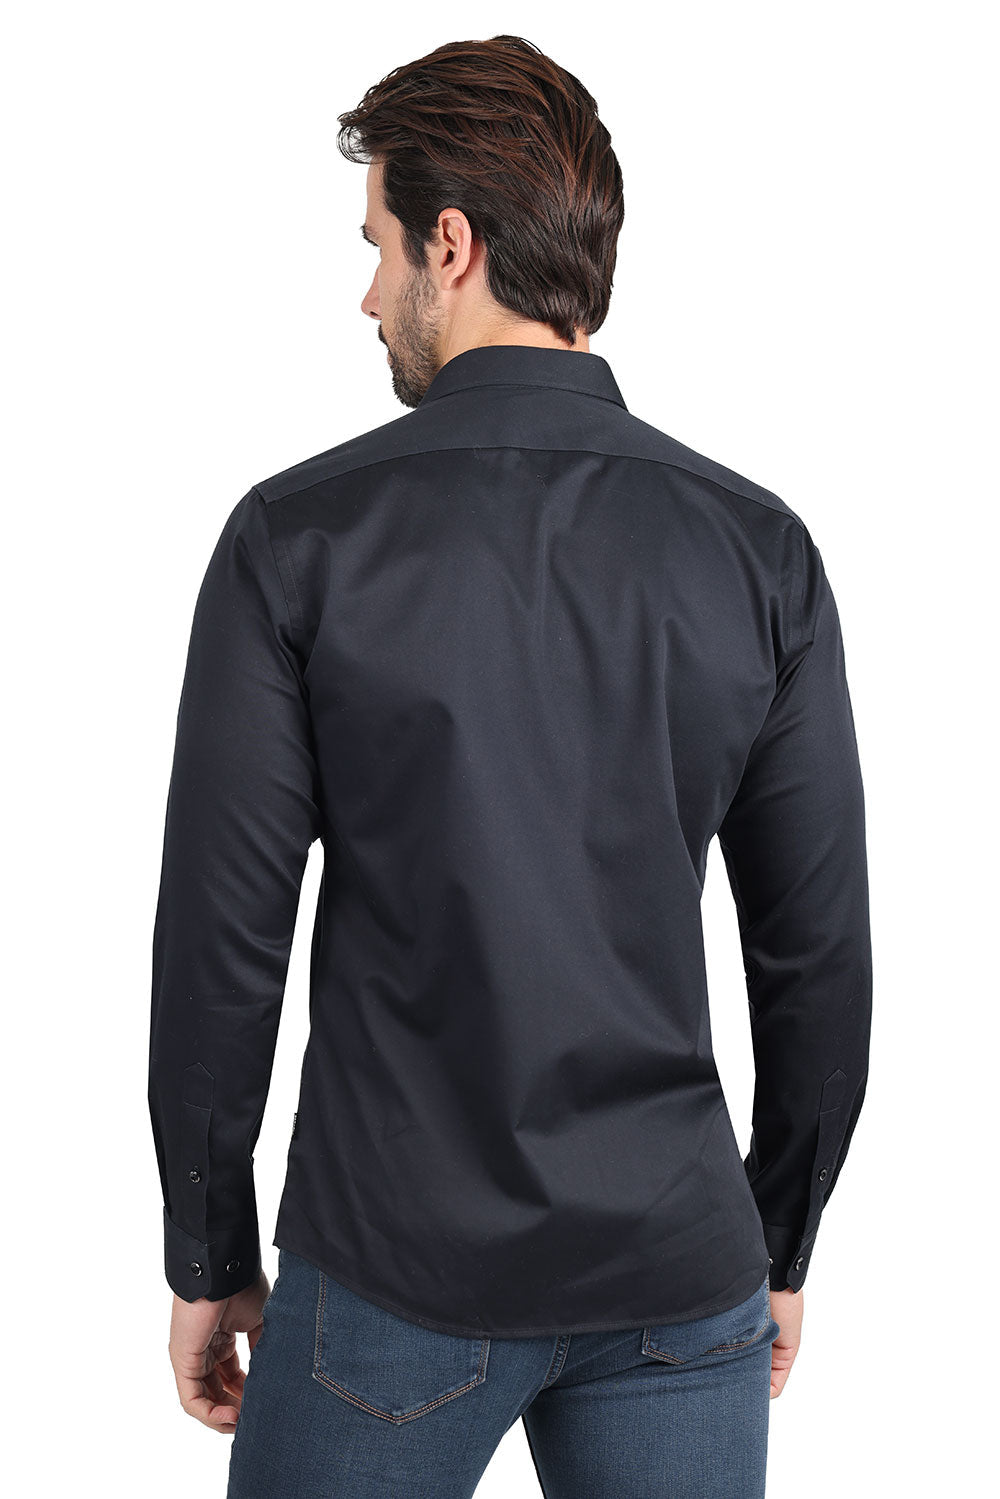 BARABAS Men's Solid Basic Palin Premium Button Down Dress Shirts 2DPS01  black